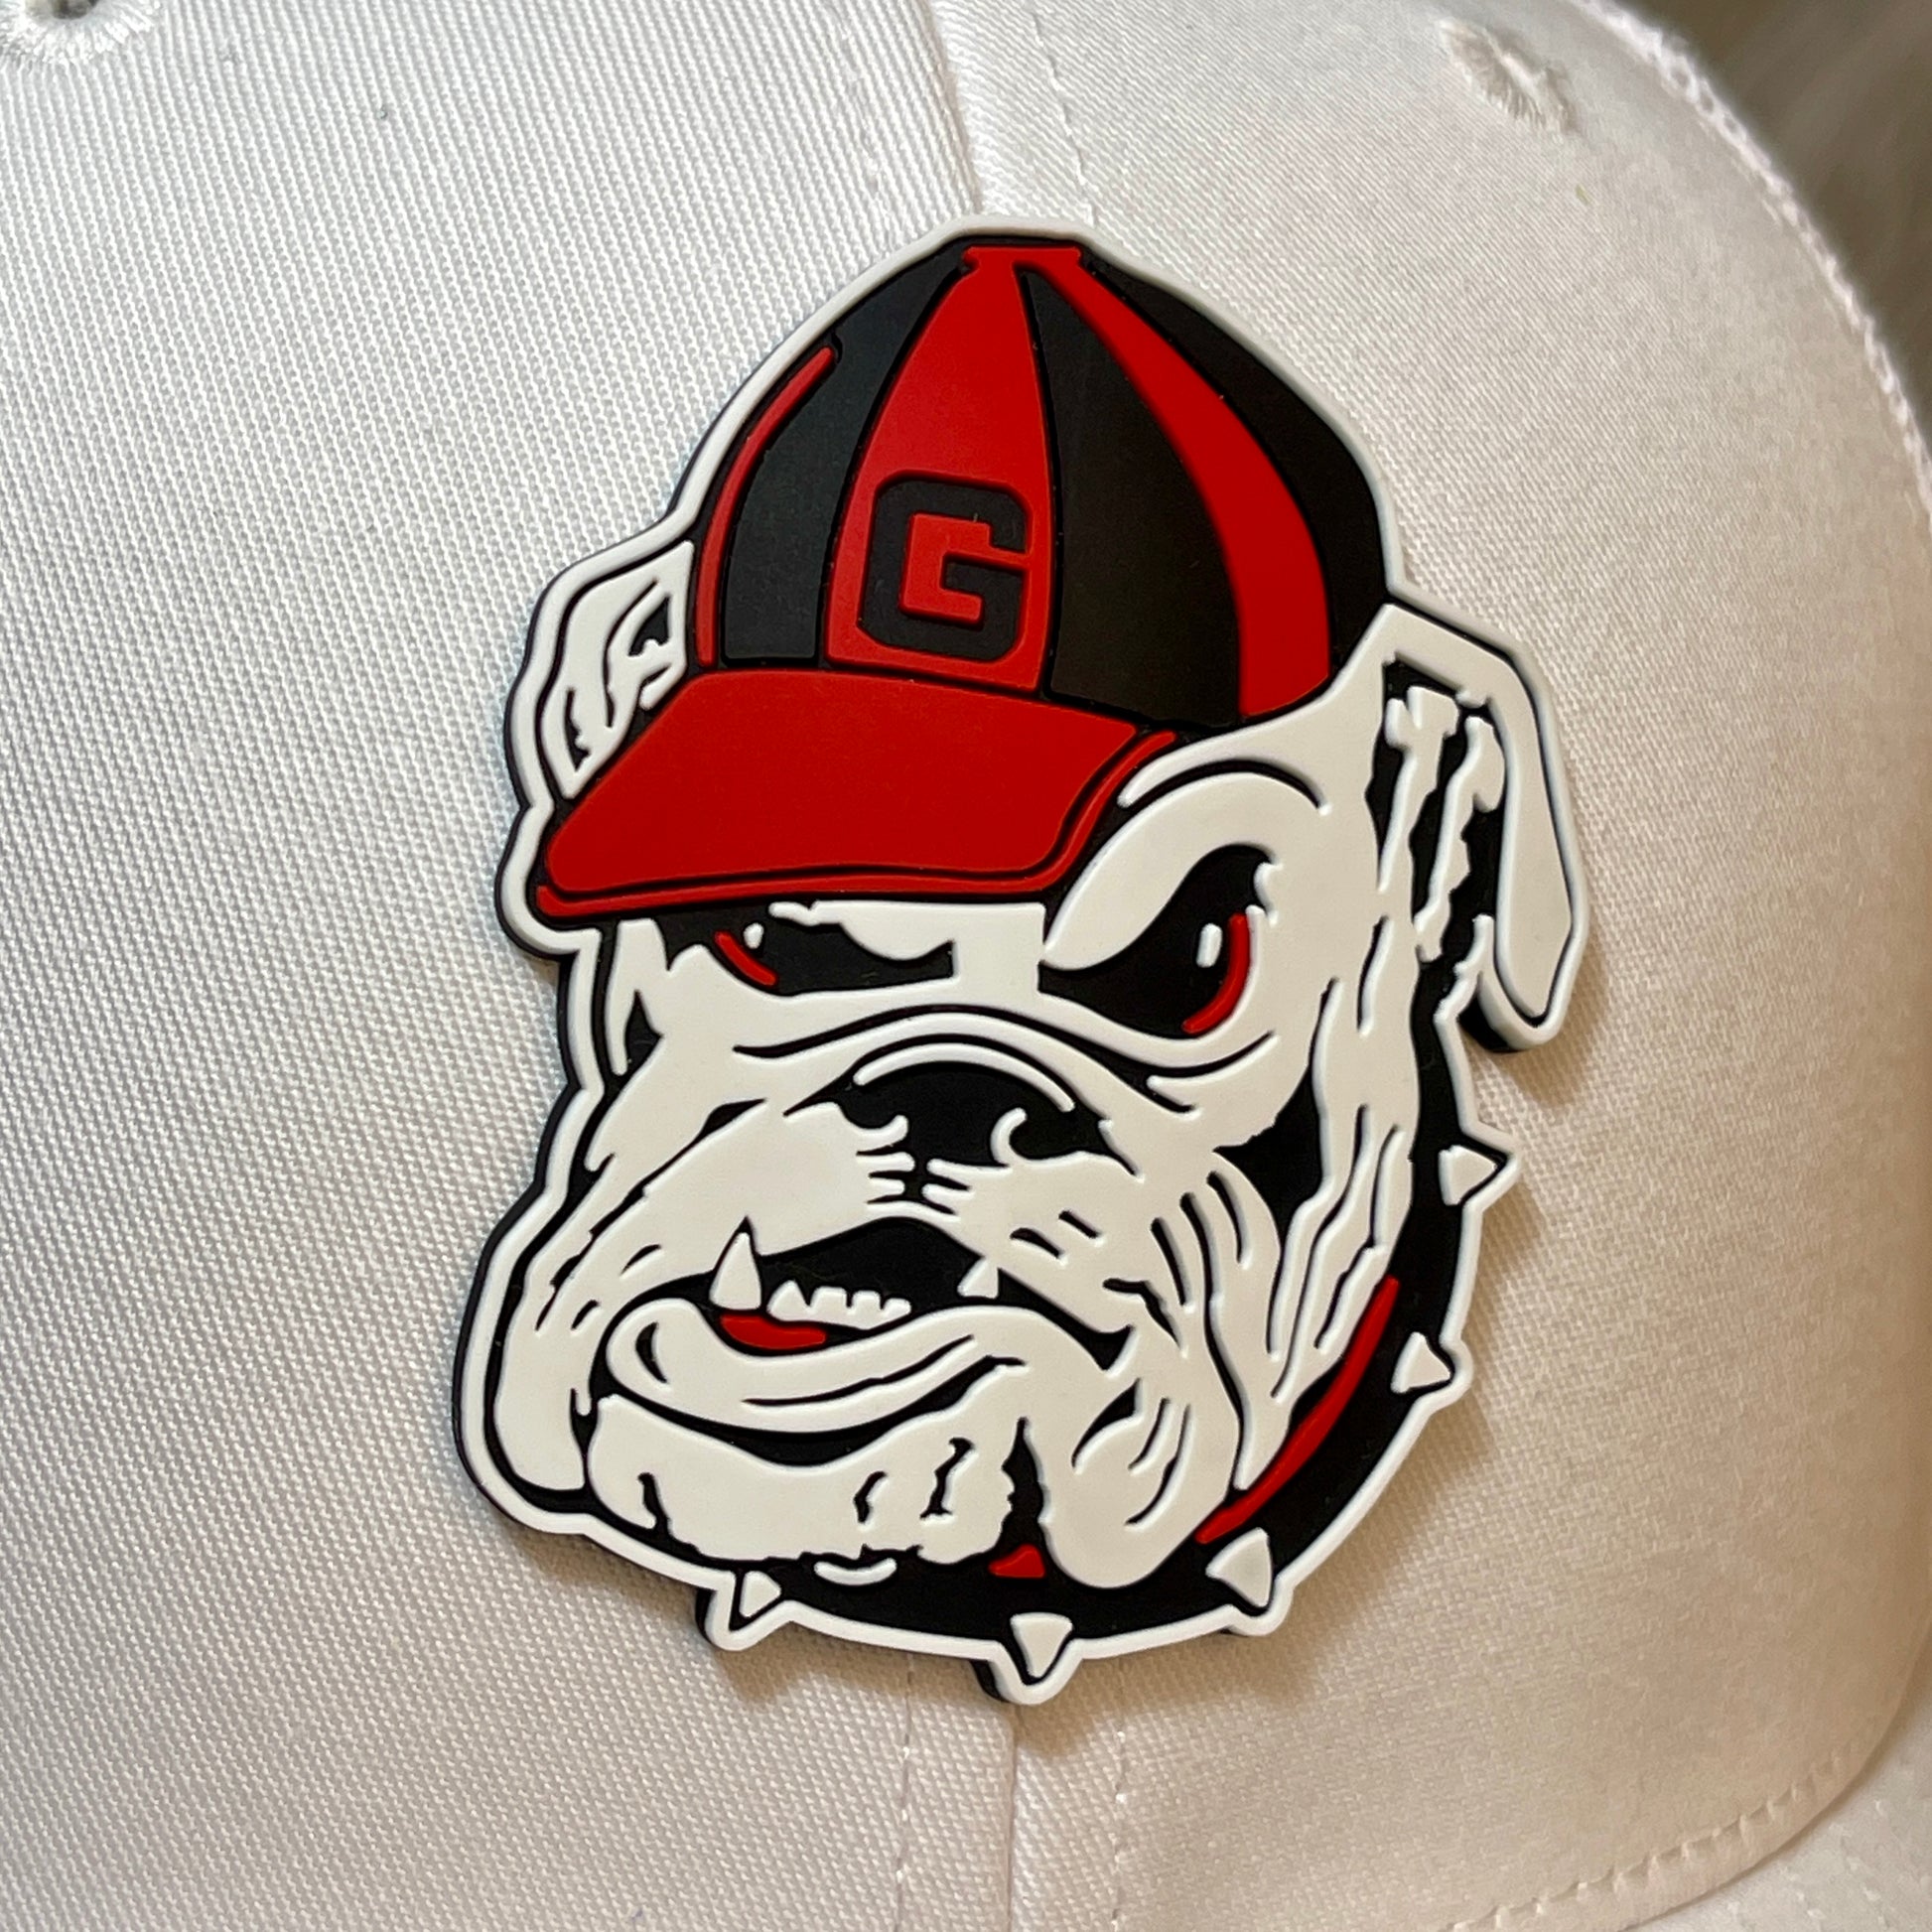 Georgia Bulldogs Vintage 3D Logo Classic Rope Hat- Black - Ten Gallon Hat Co.